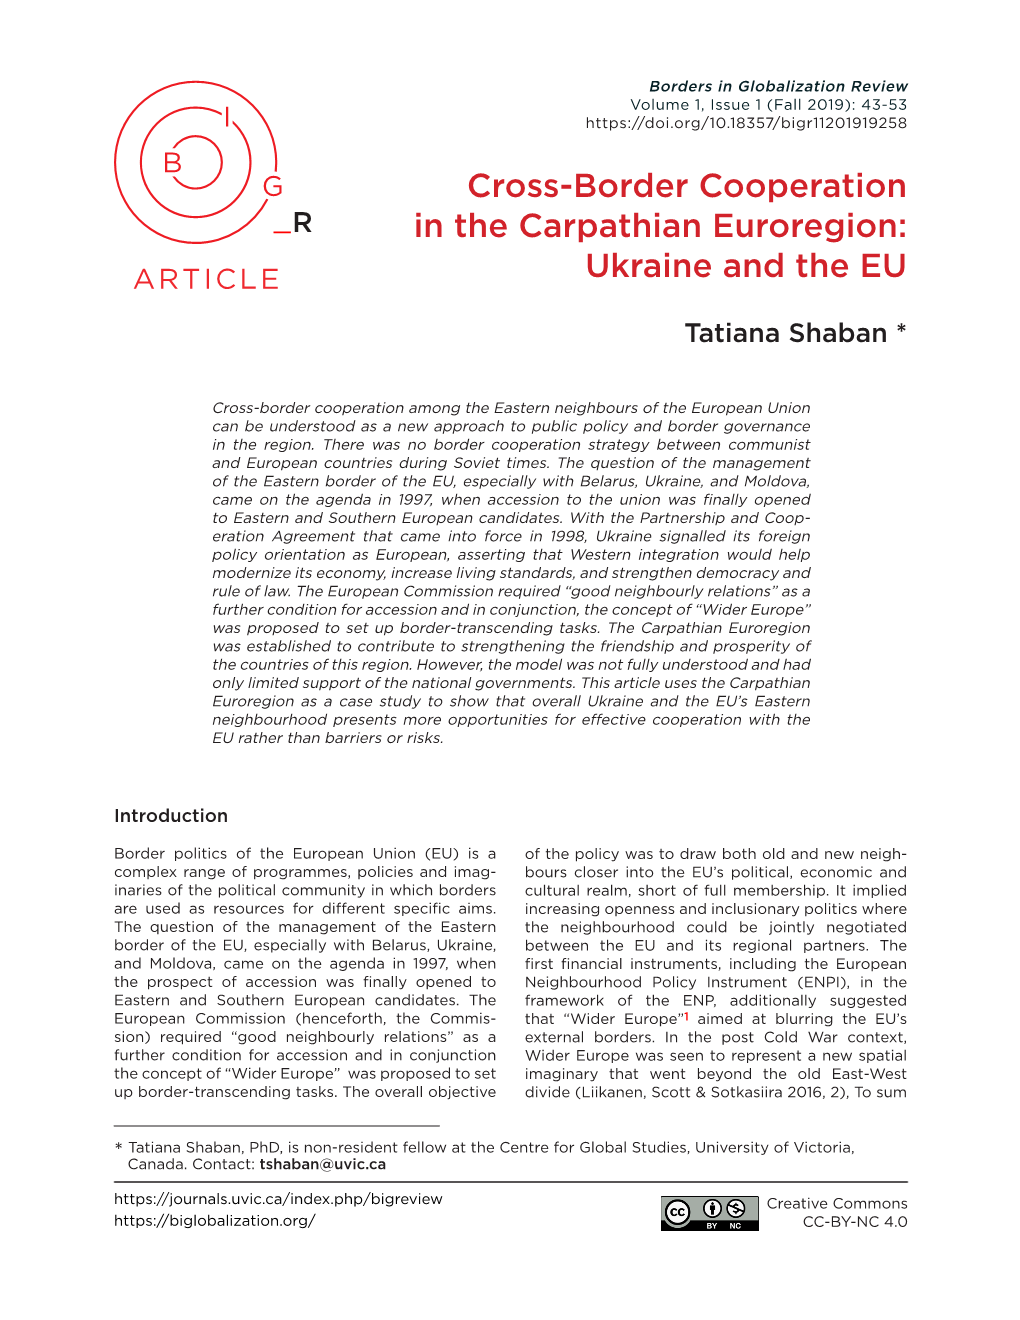 Cross-Border Cooperation in the Carpathian Euroregion” R